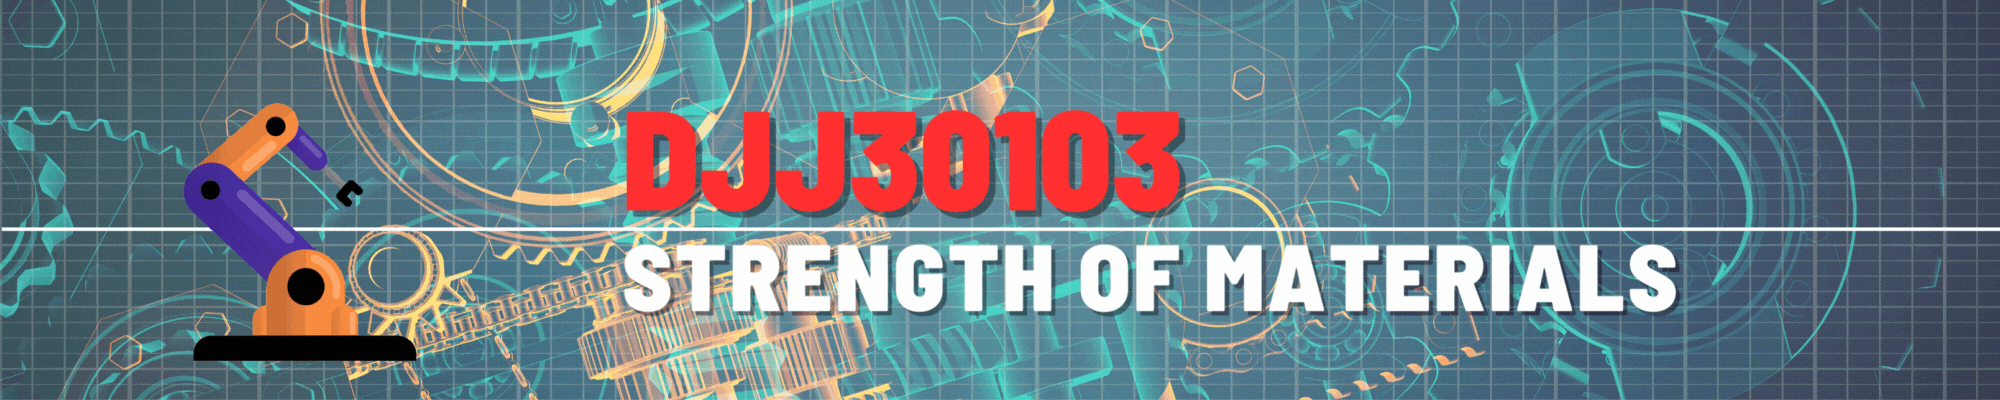 DJJ30103 STRENGTH OF MATERIALS